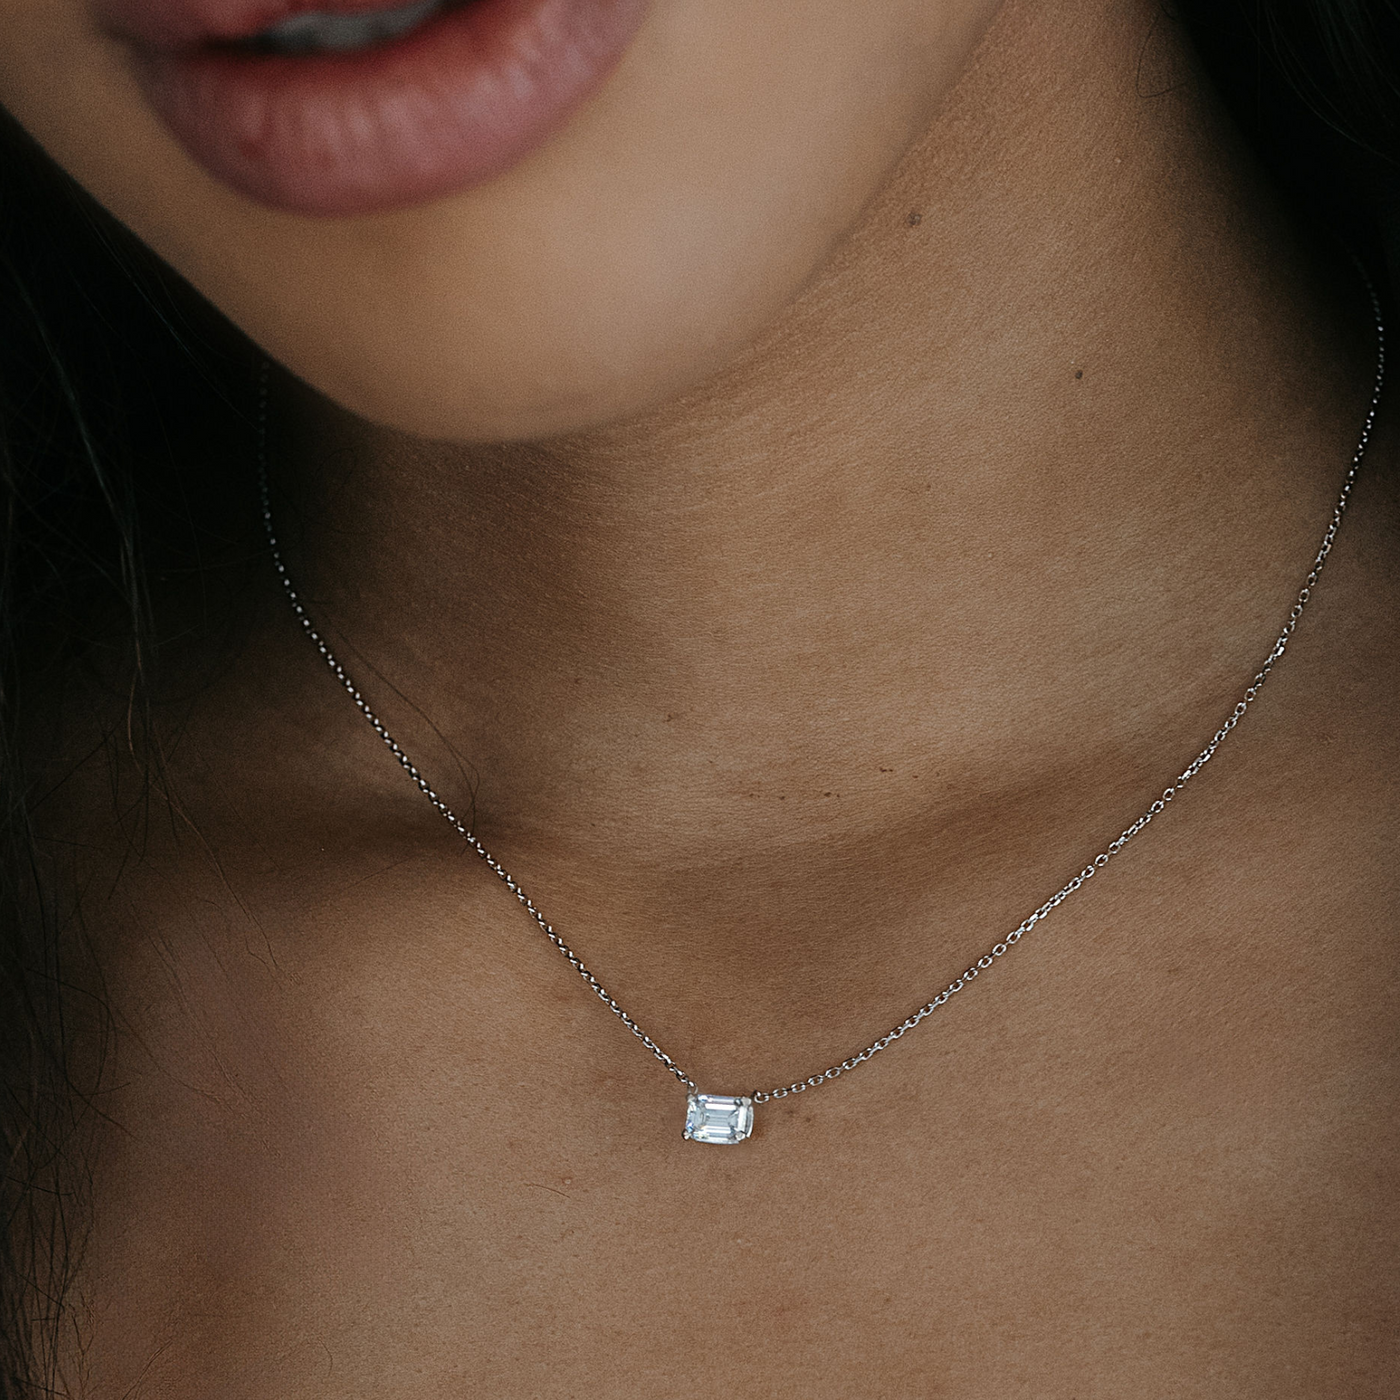 emerald cut diamond solitaire necklace